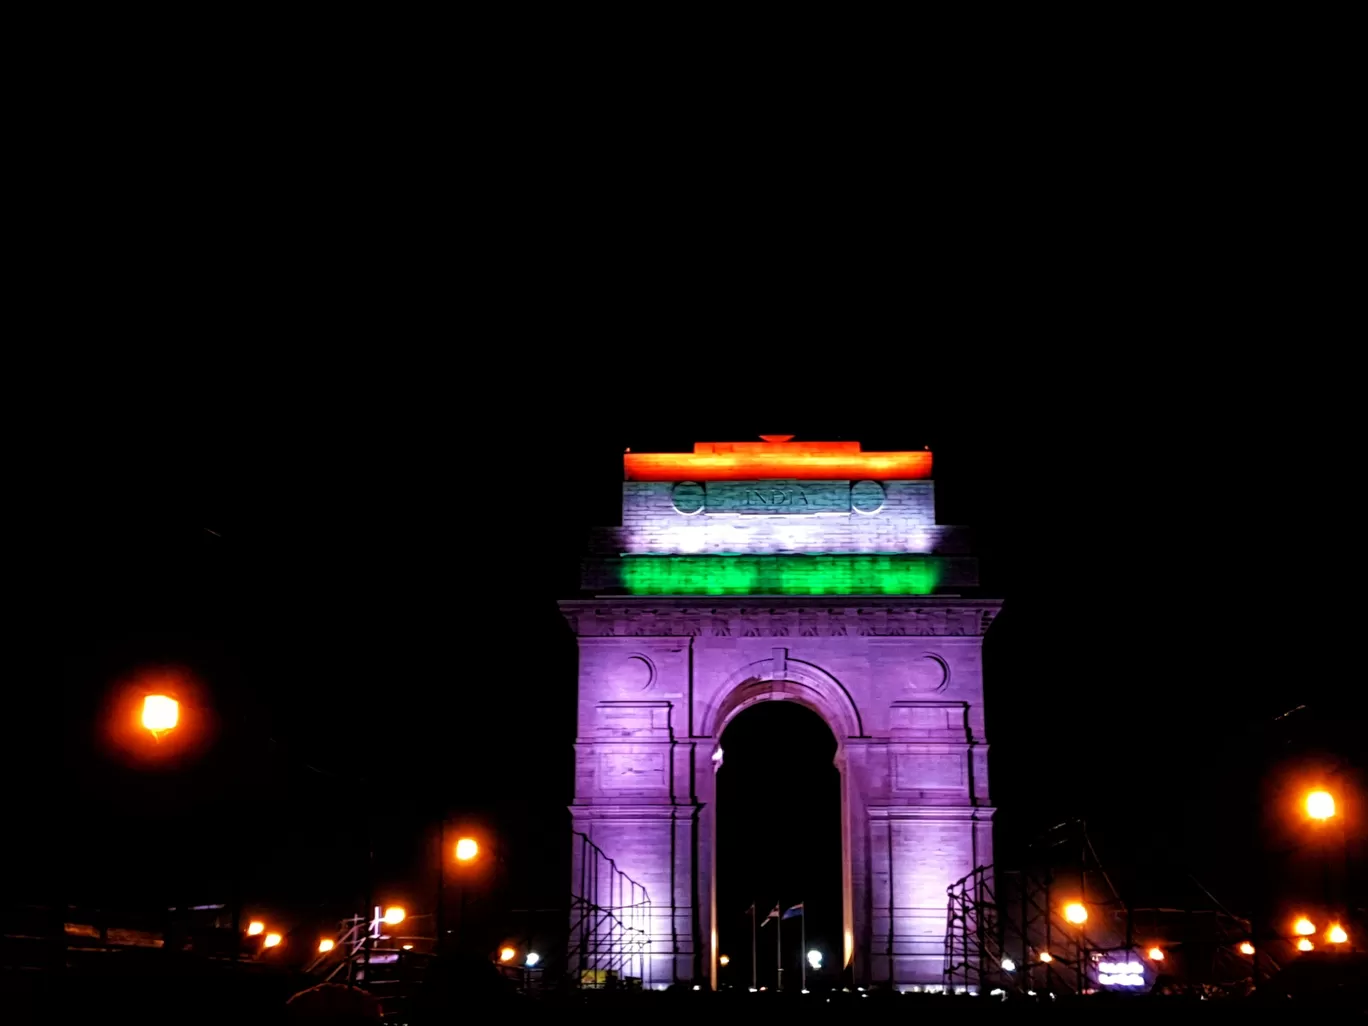 Photo of India Gate By S S (Saurabh Sabikhi)